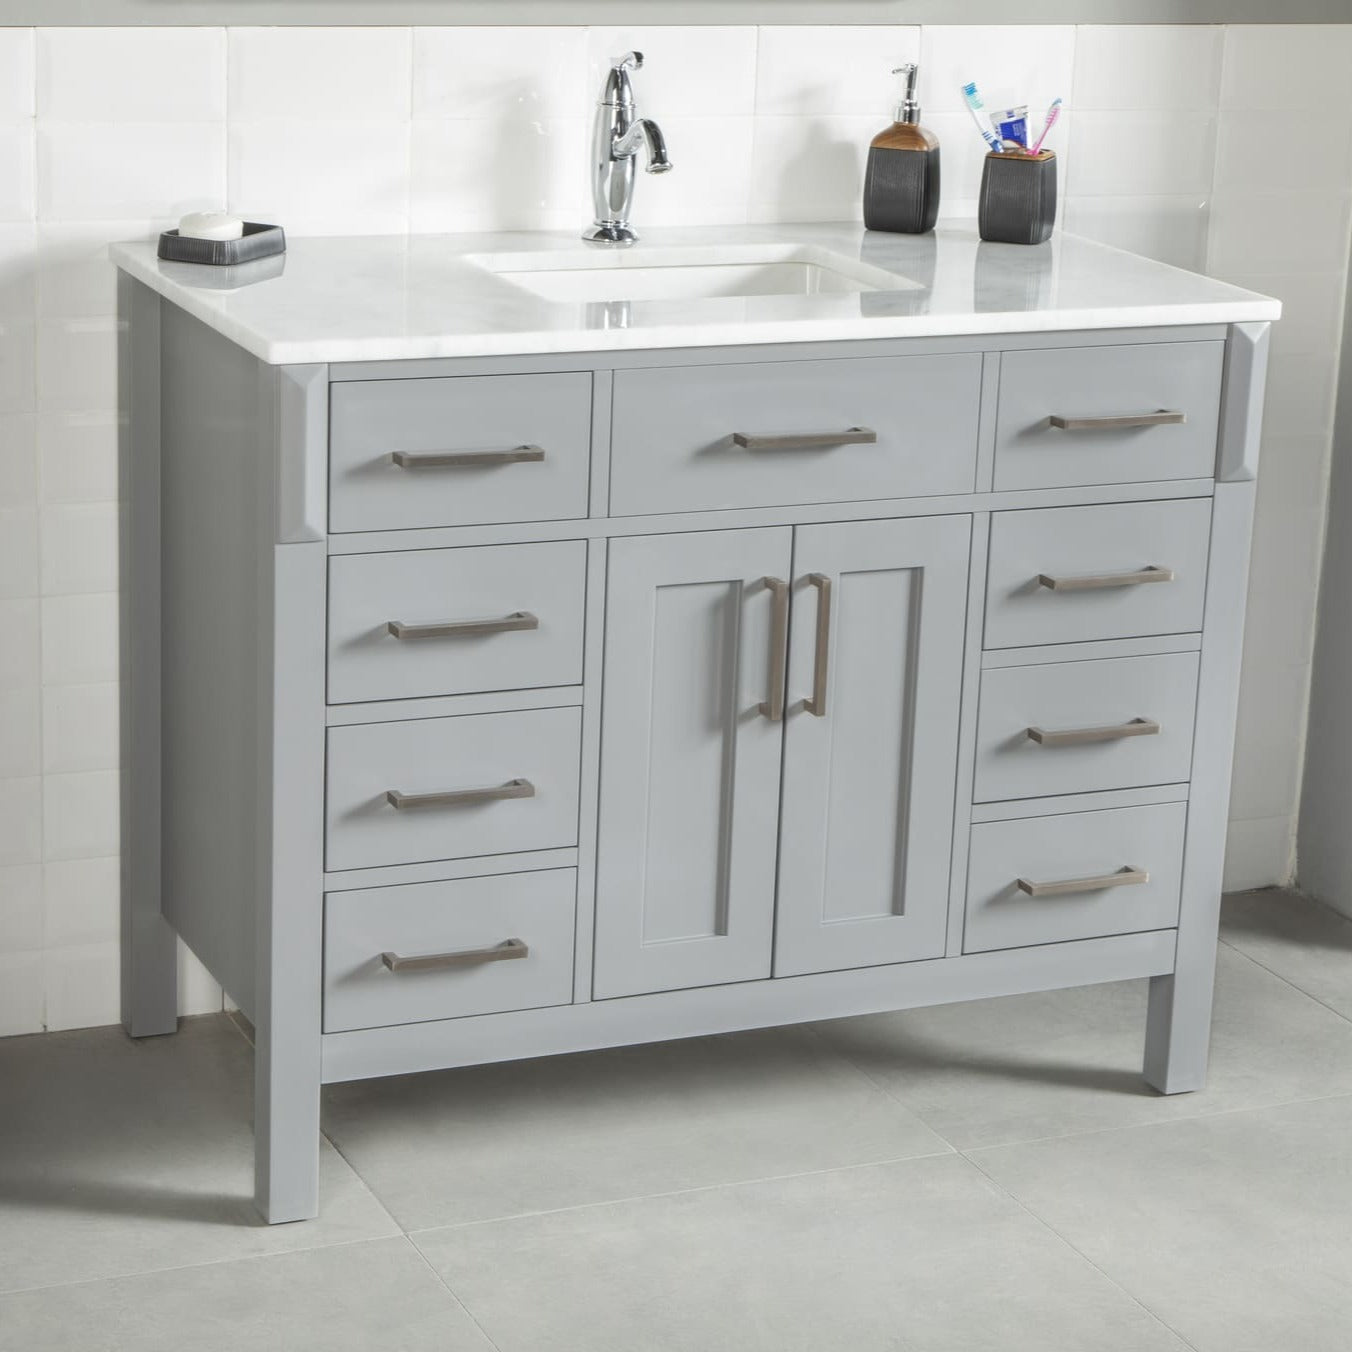 Fawna Bathroom Vanity Homelero 42"  #size_42"  #color_grey  #hardware_brushed nickel